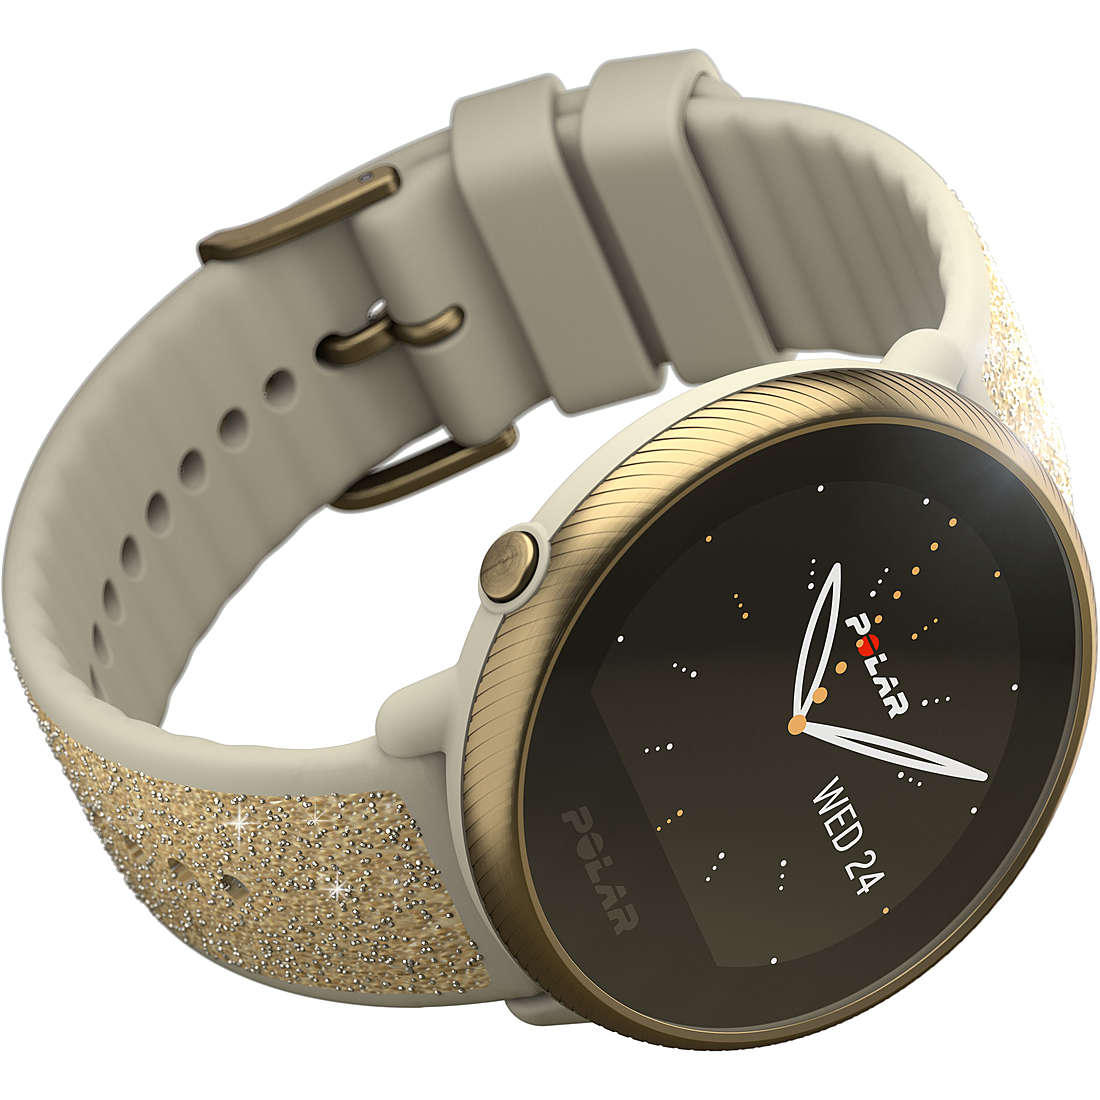 orologio Smartwatch donna Polar Ignite 2 - 900104363 900104363